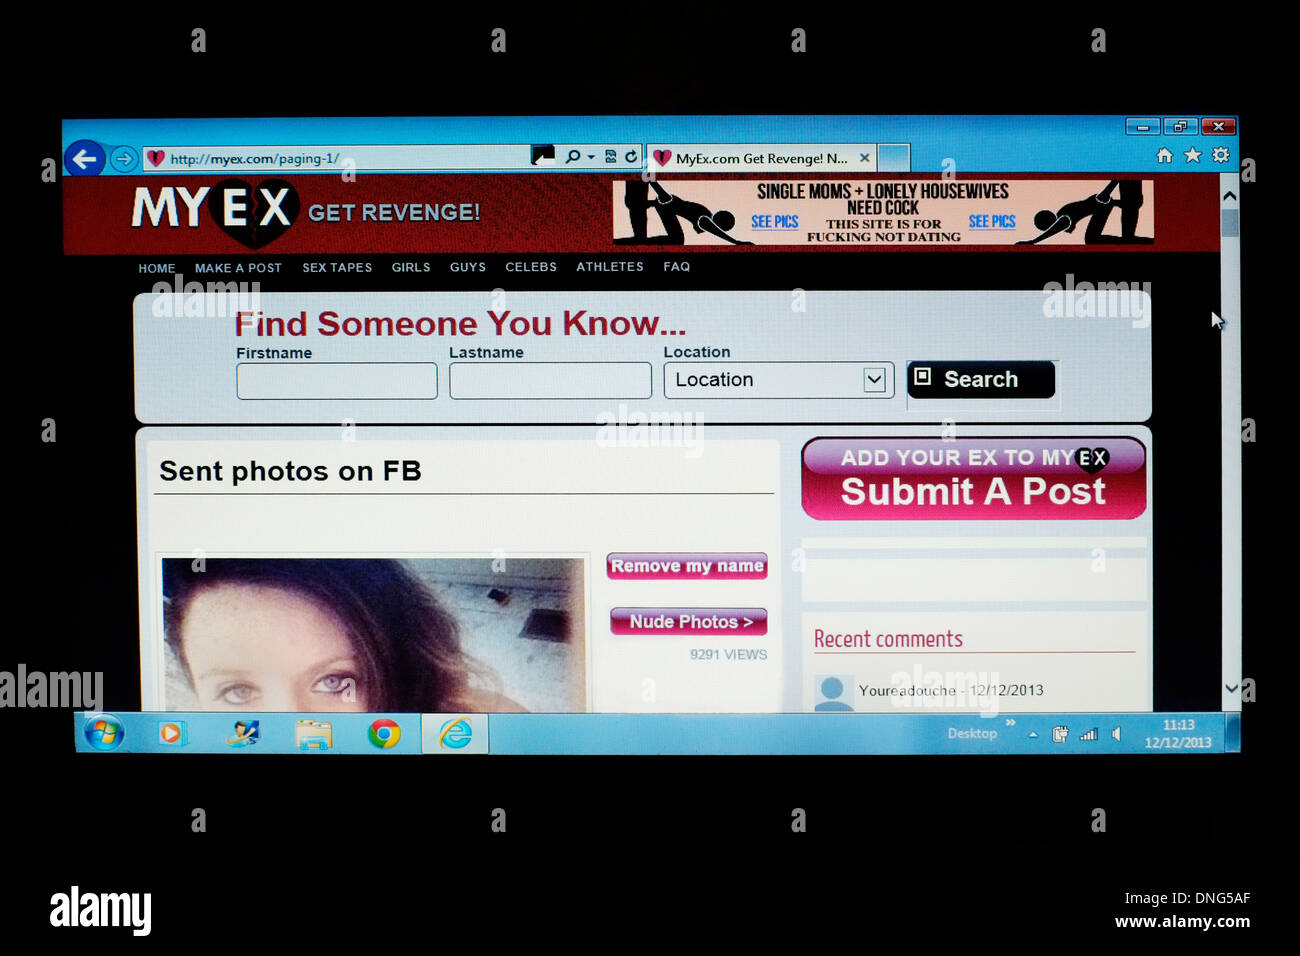 ex girlfriend revenge website